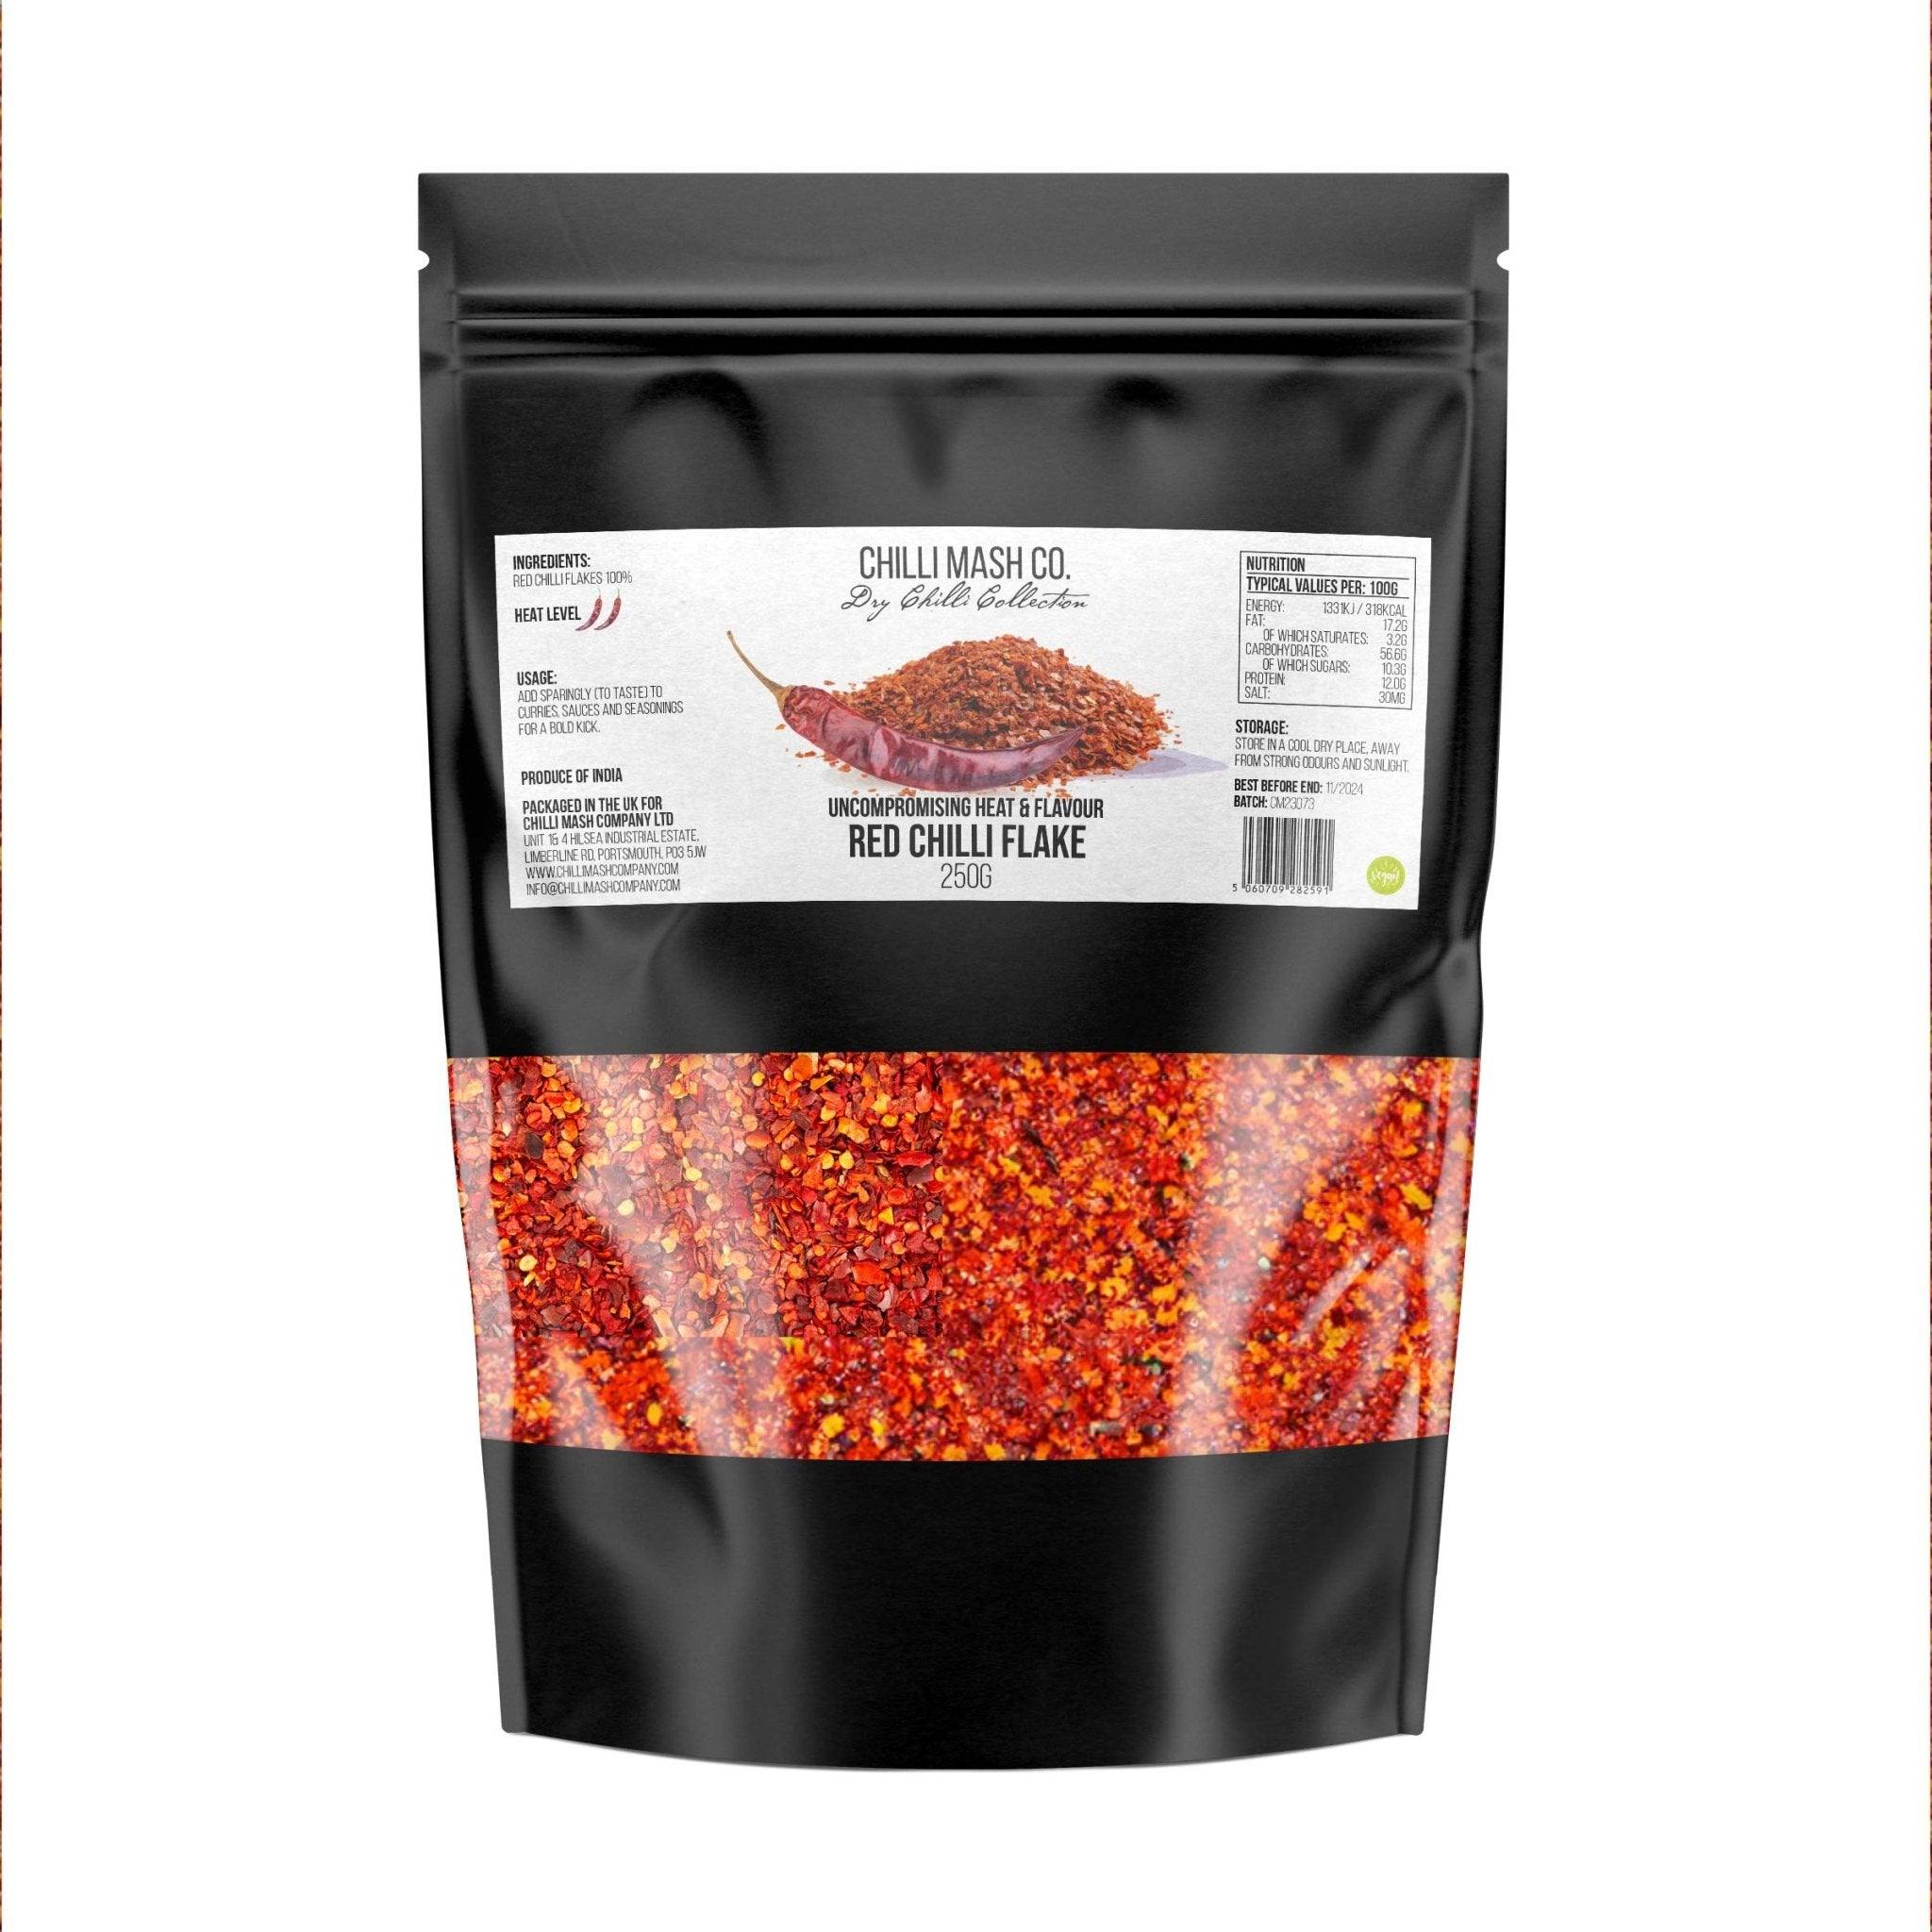 Red Chilli Flake 250g | Chilli Mash Company | Mild Spice from India - One Stop Chilli Shop